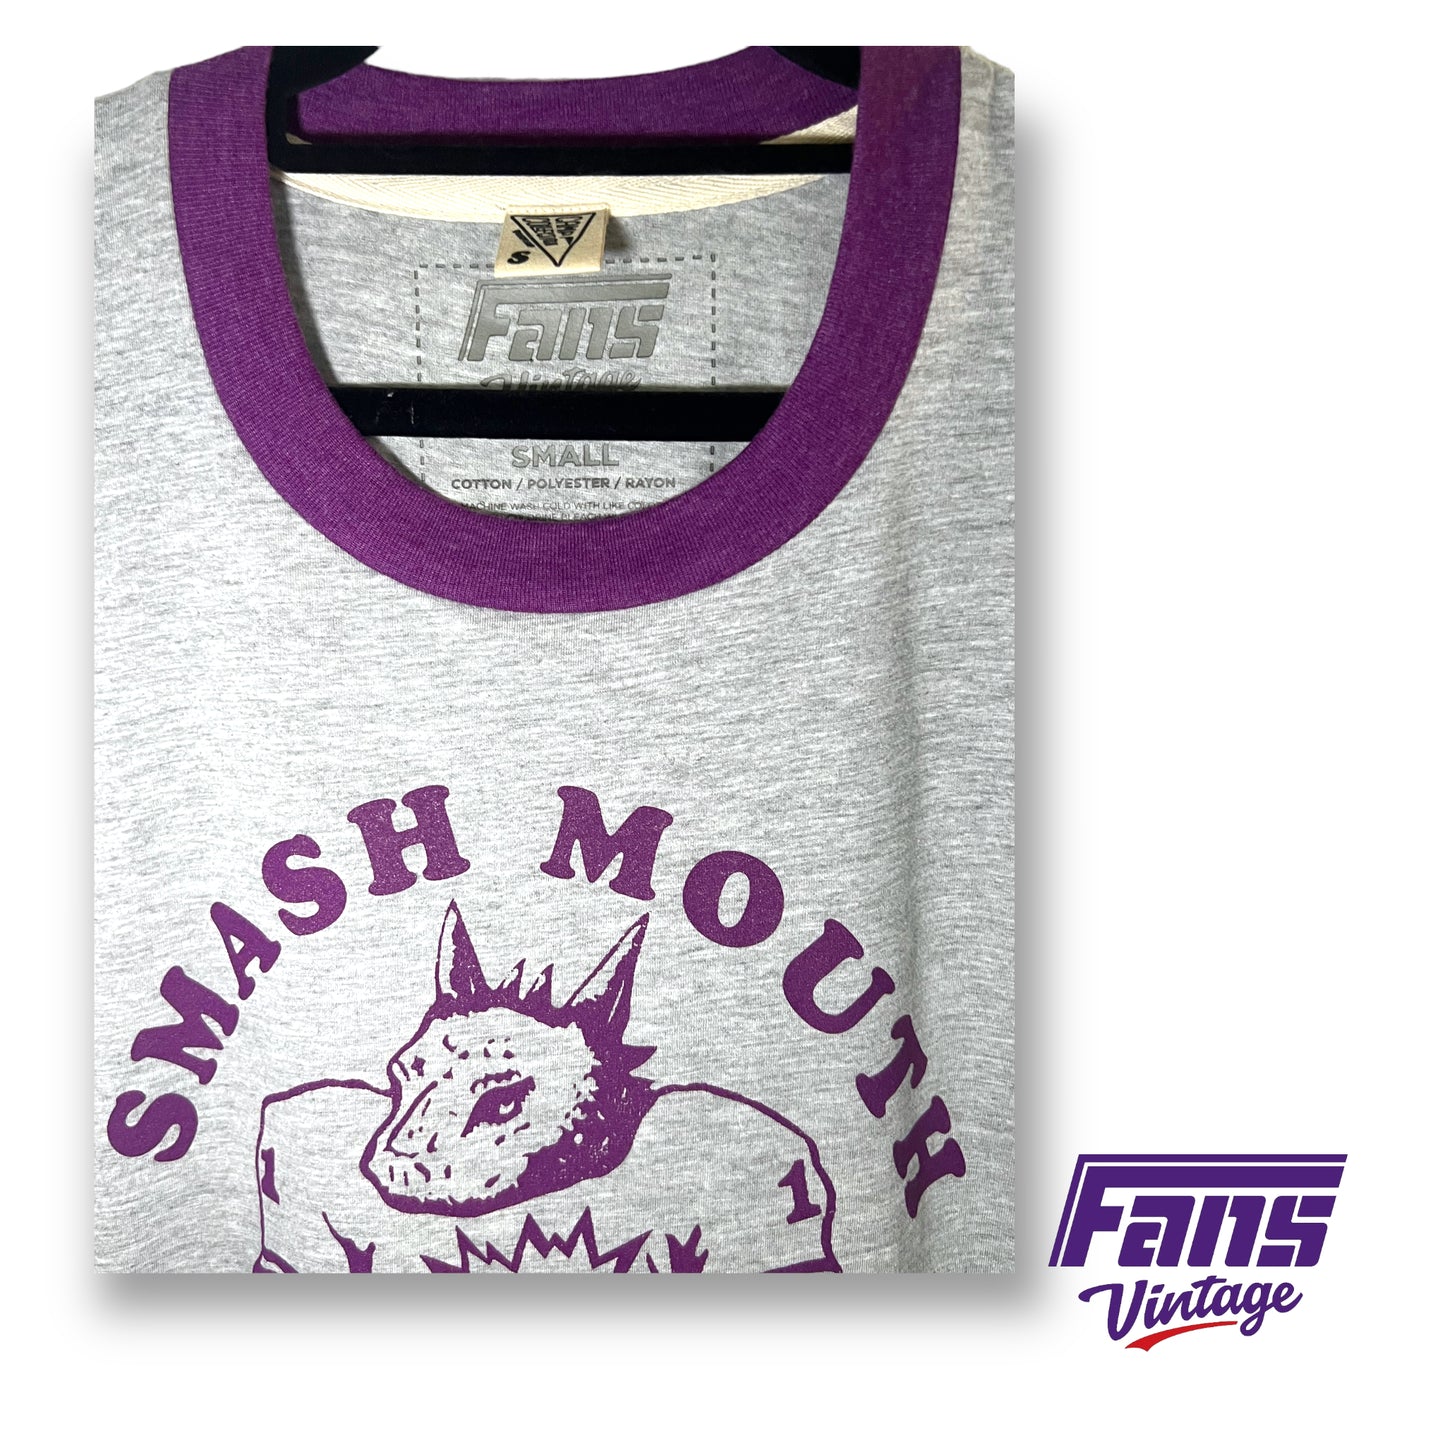 Fans Vintage 1980s “Smash Mouth Football” Ringer Tee